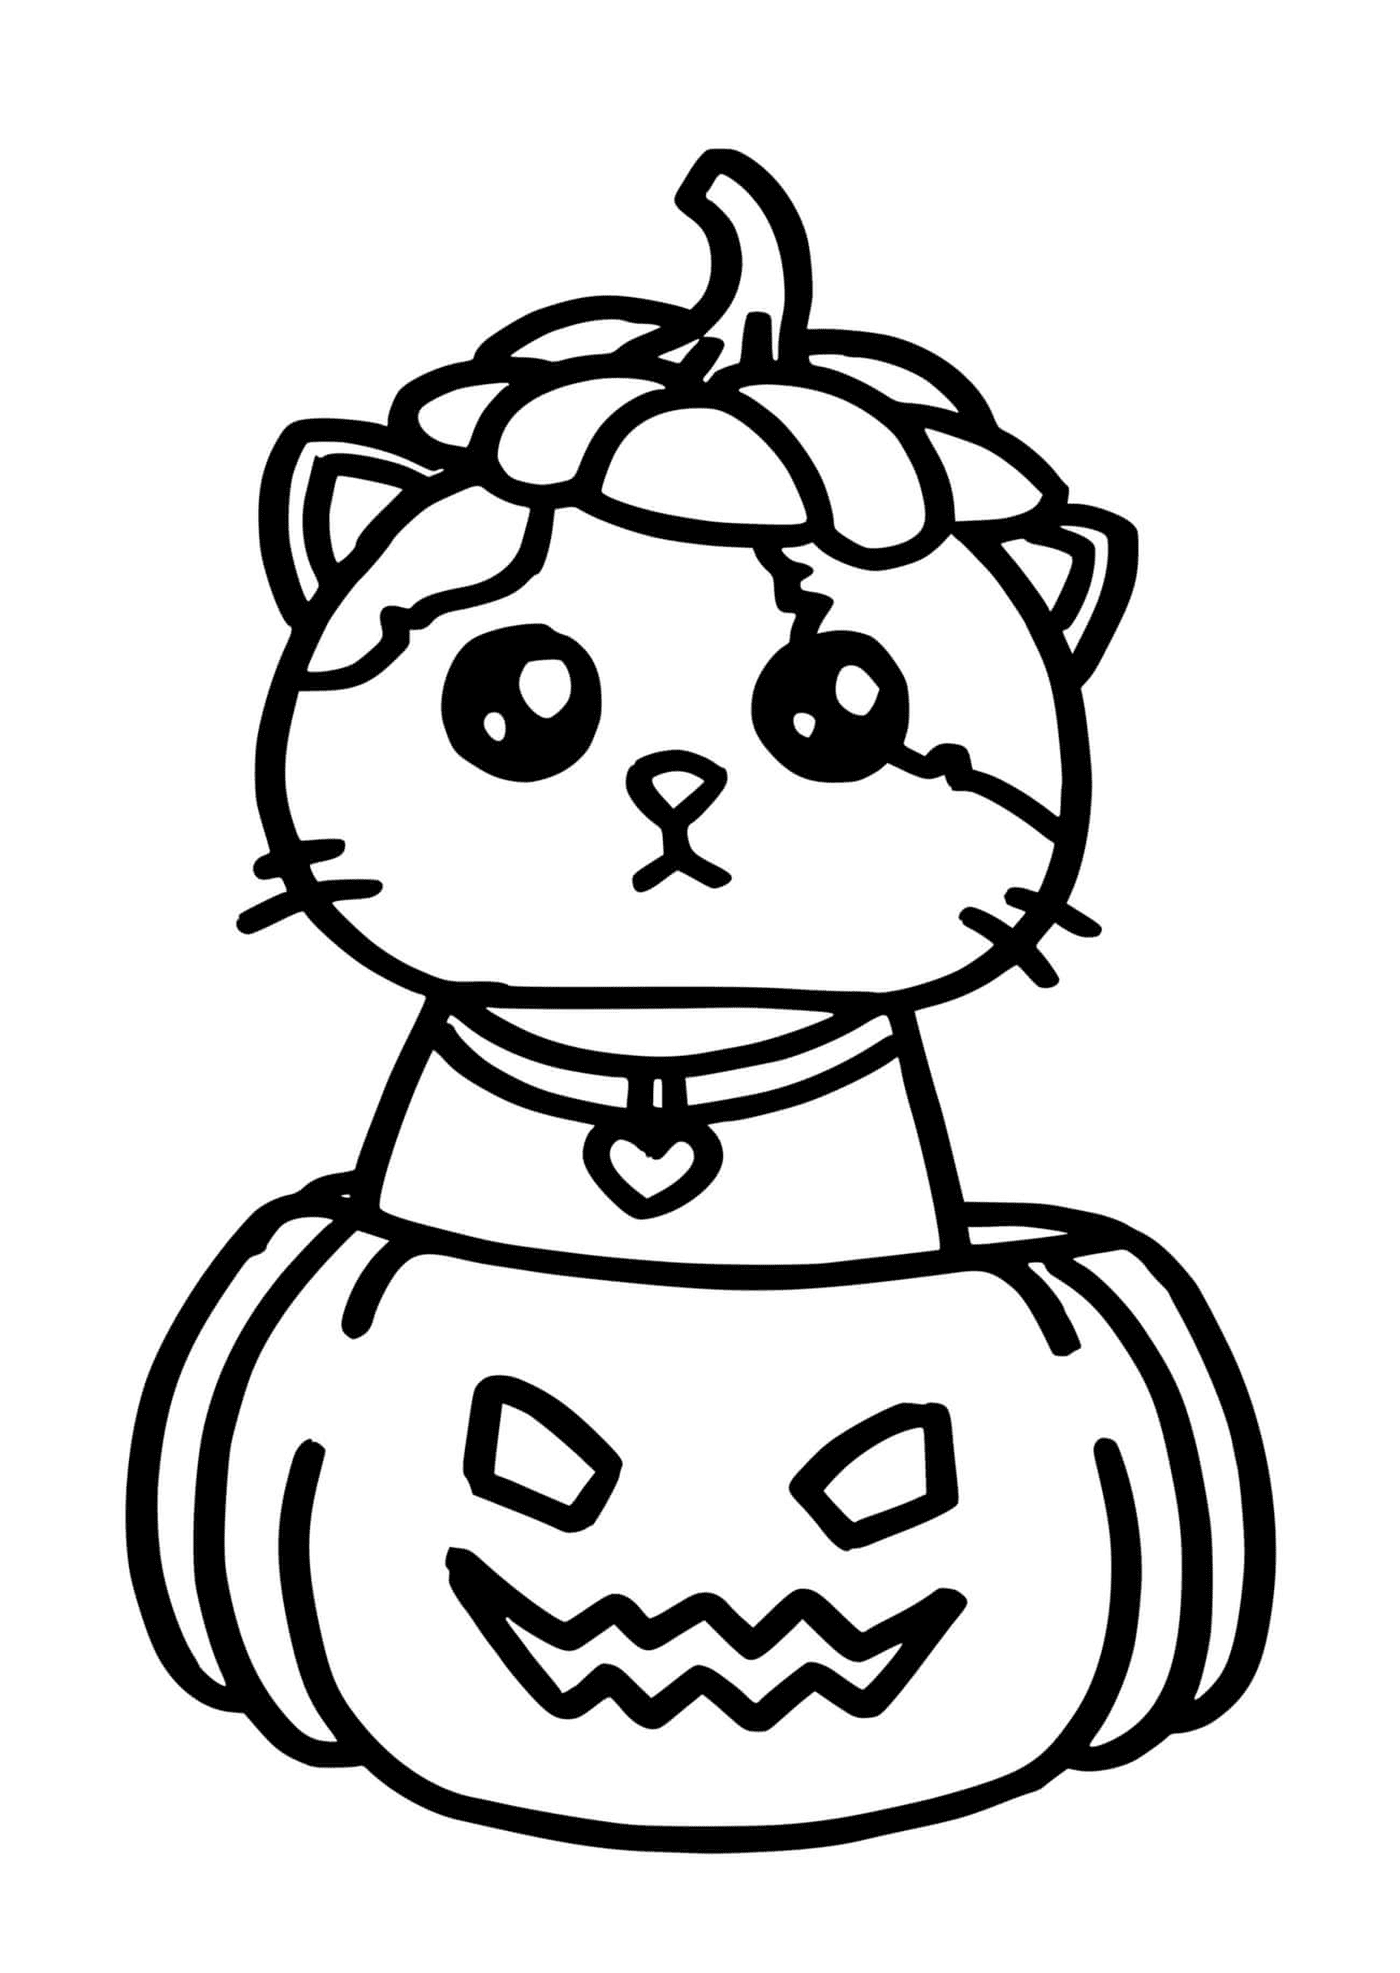 coloriage chat kawaii dans une cirtrouille halloween facile